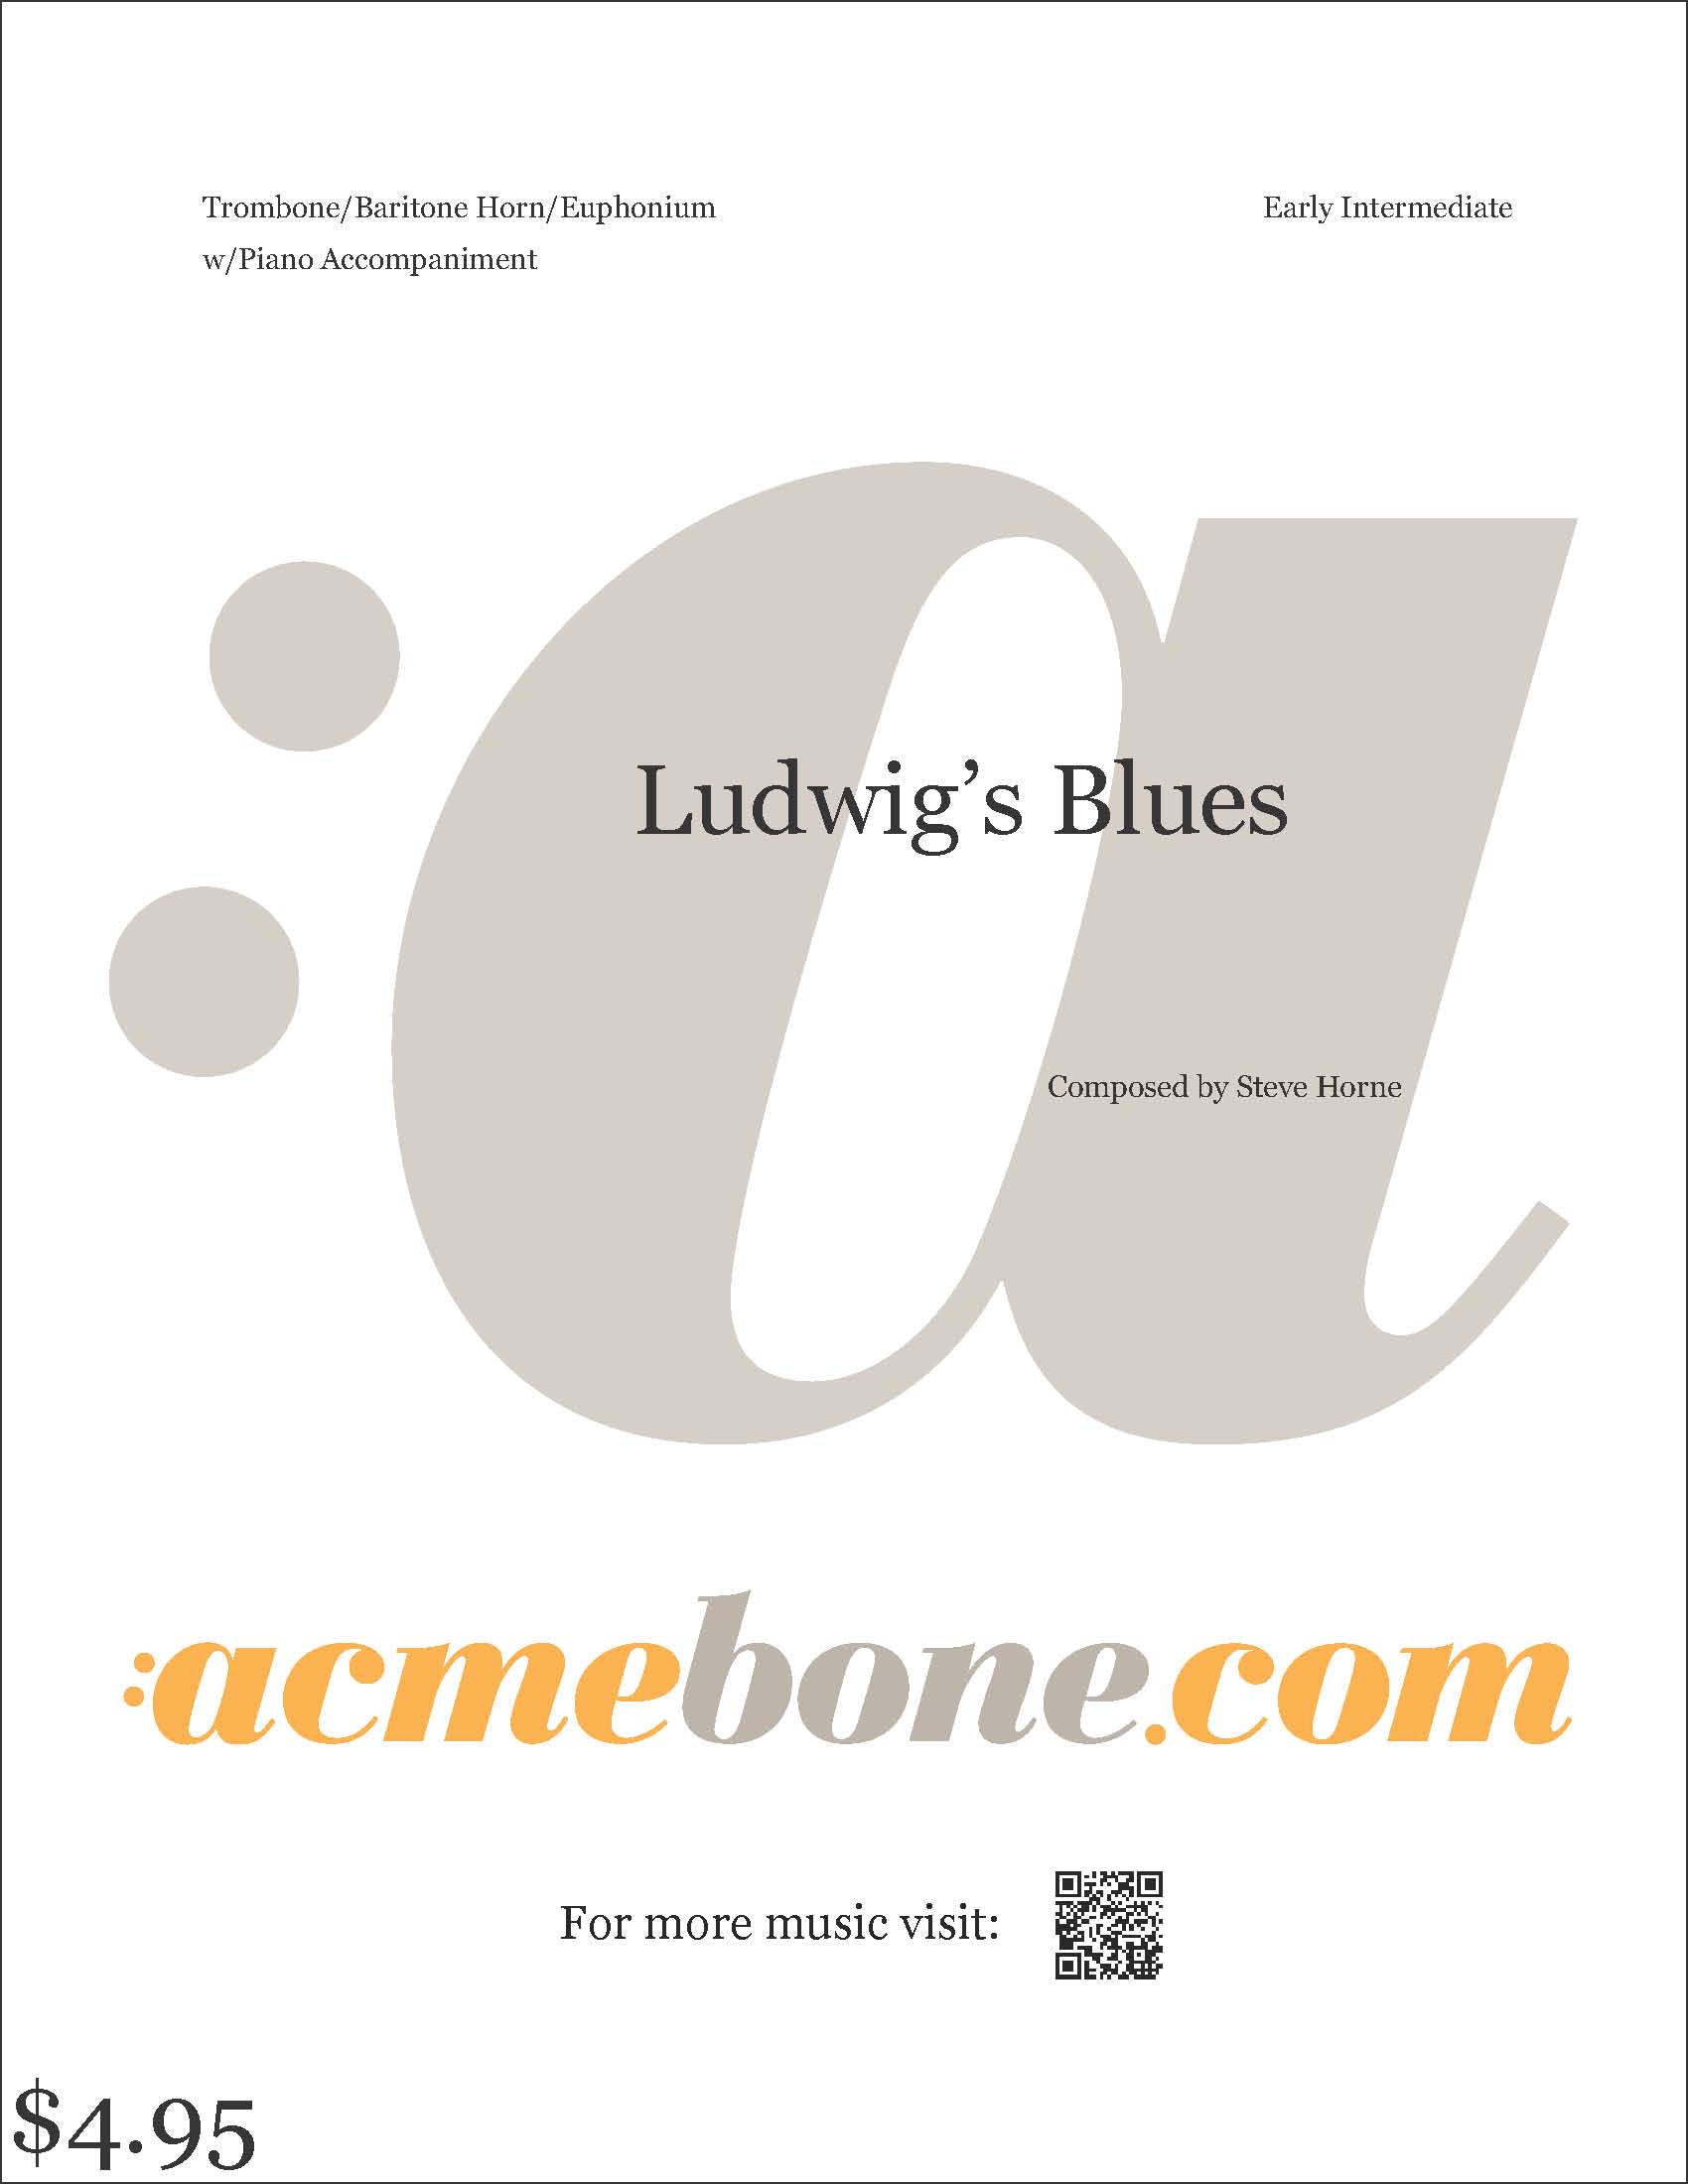 Ludwig's Blues_digital_cover_w-bo_price.jpg